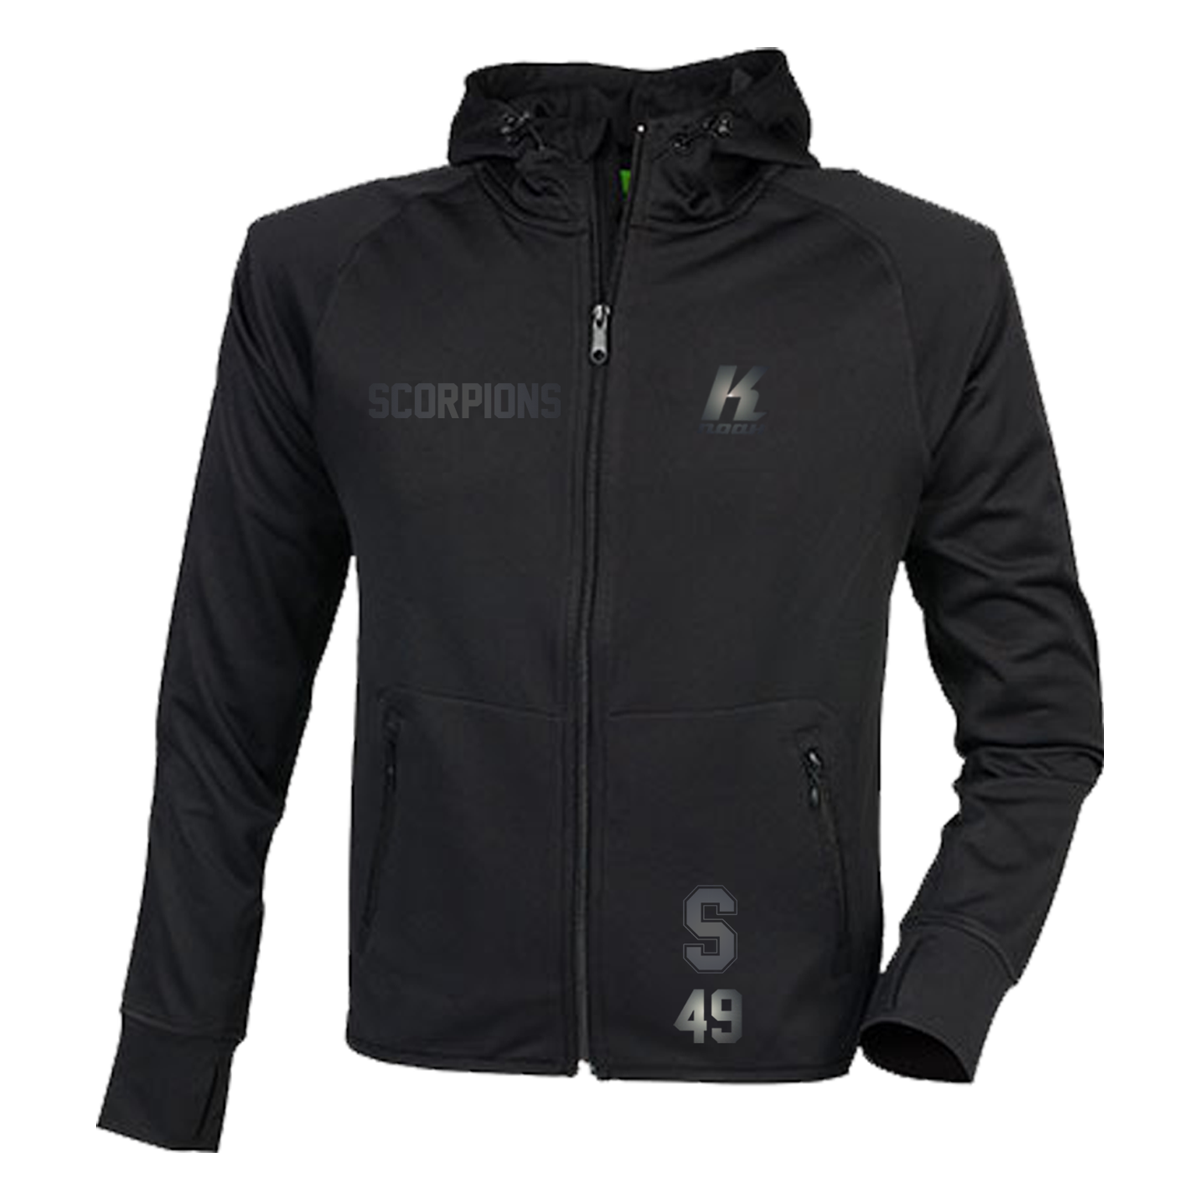 Scorpions "Blackline" Zip Hoodie TL550 with Playernumber or Initials